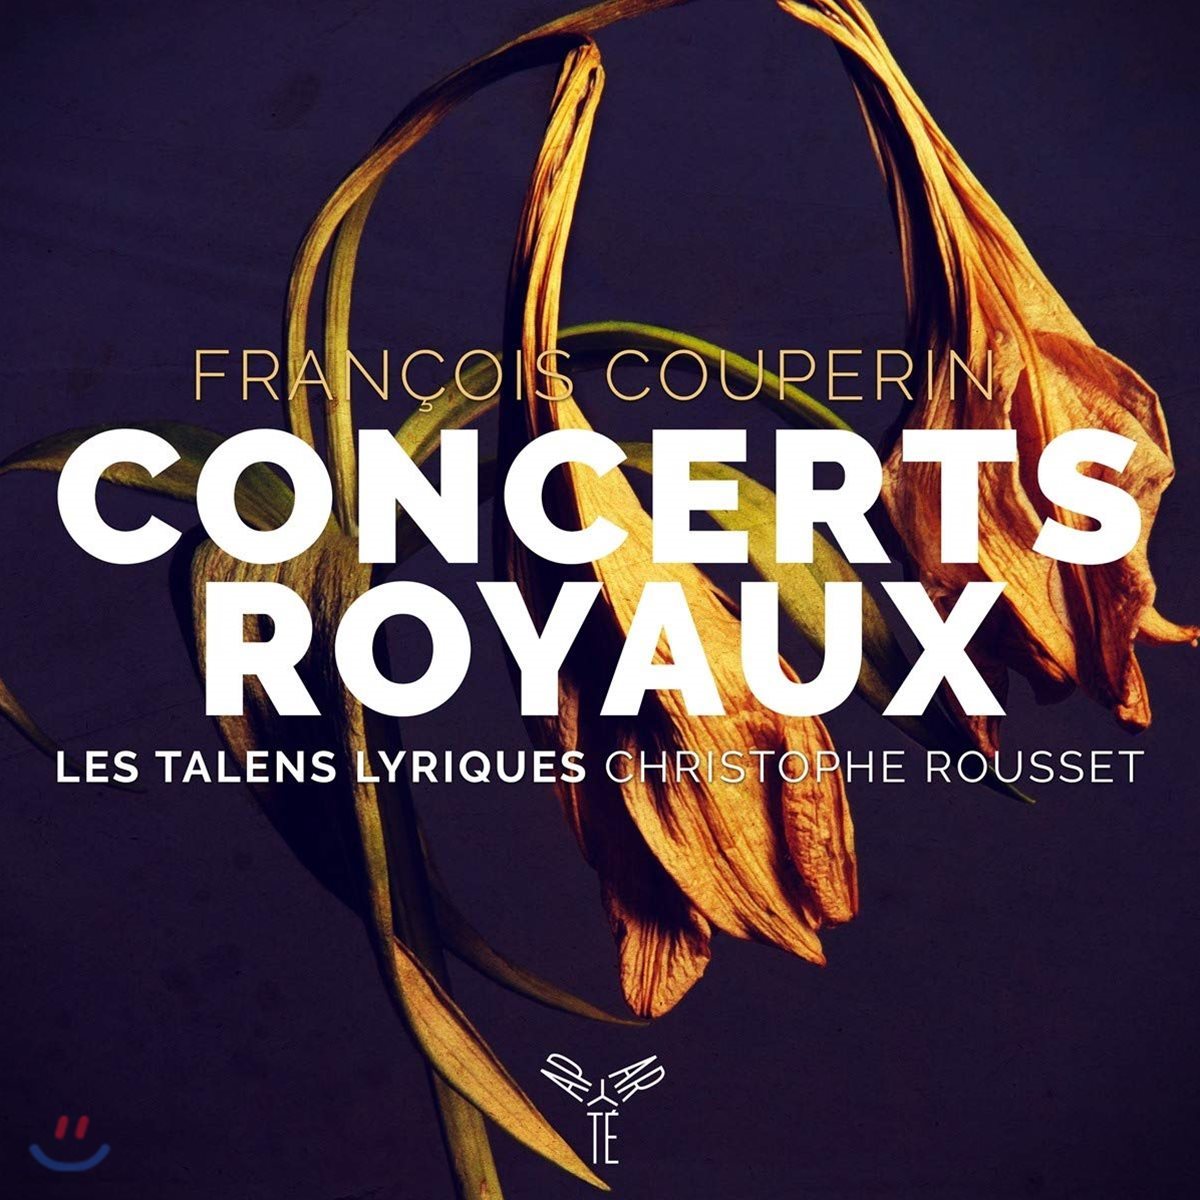 Stephanie-Marie Degand 쿠프랭: 왕궁의 콩세르 (Couperin: Concerts Royaux)